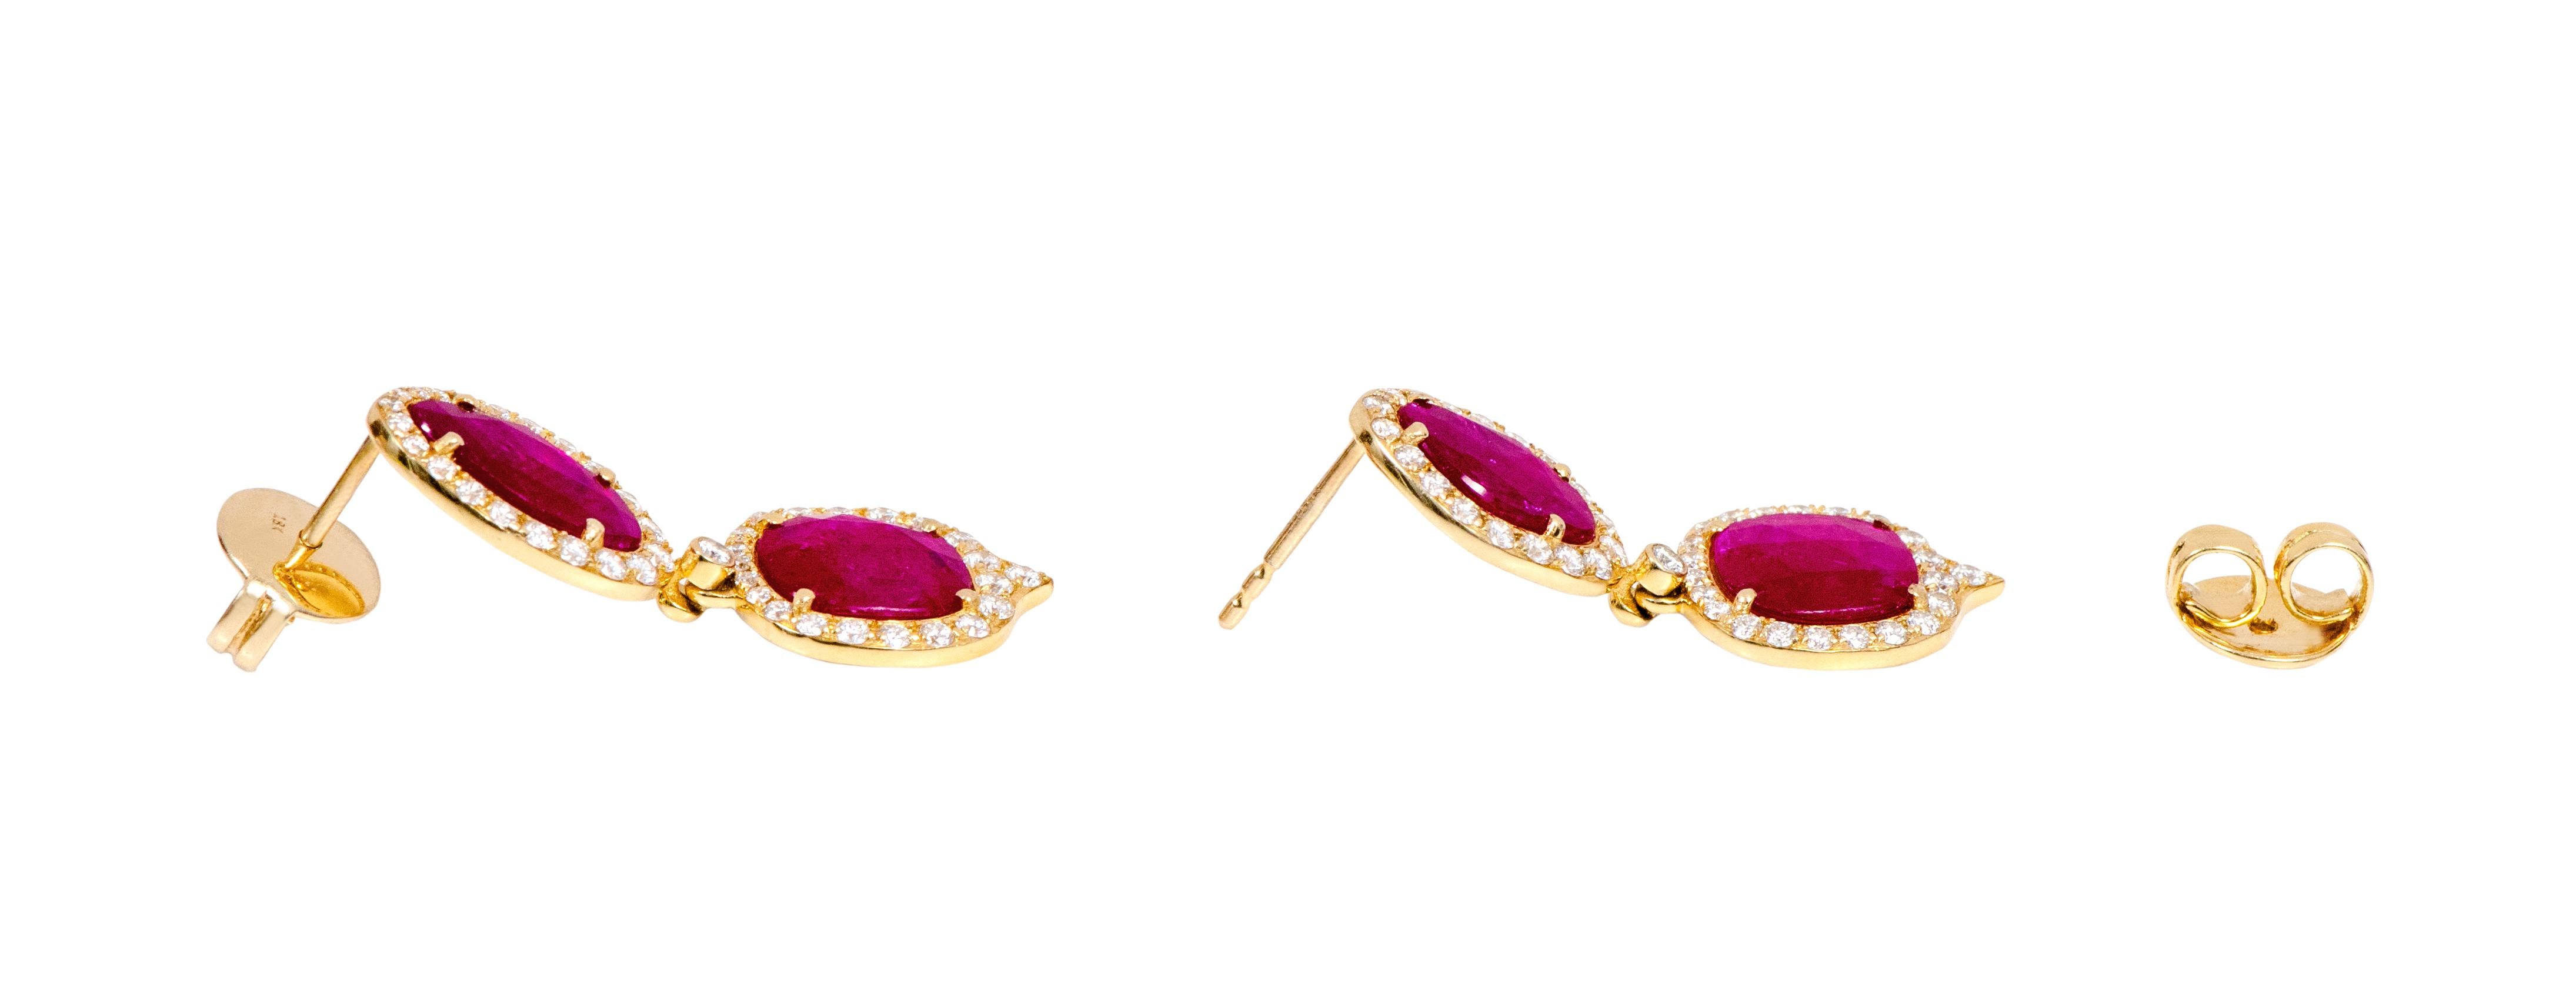 18 Karat Yellow Gold 3.12 Carat Ruby and Diamond Drop Earrings For Sale 1